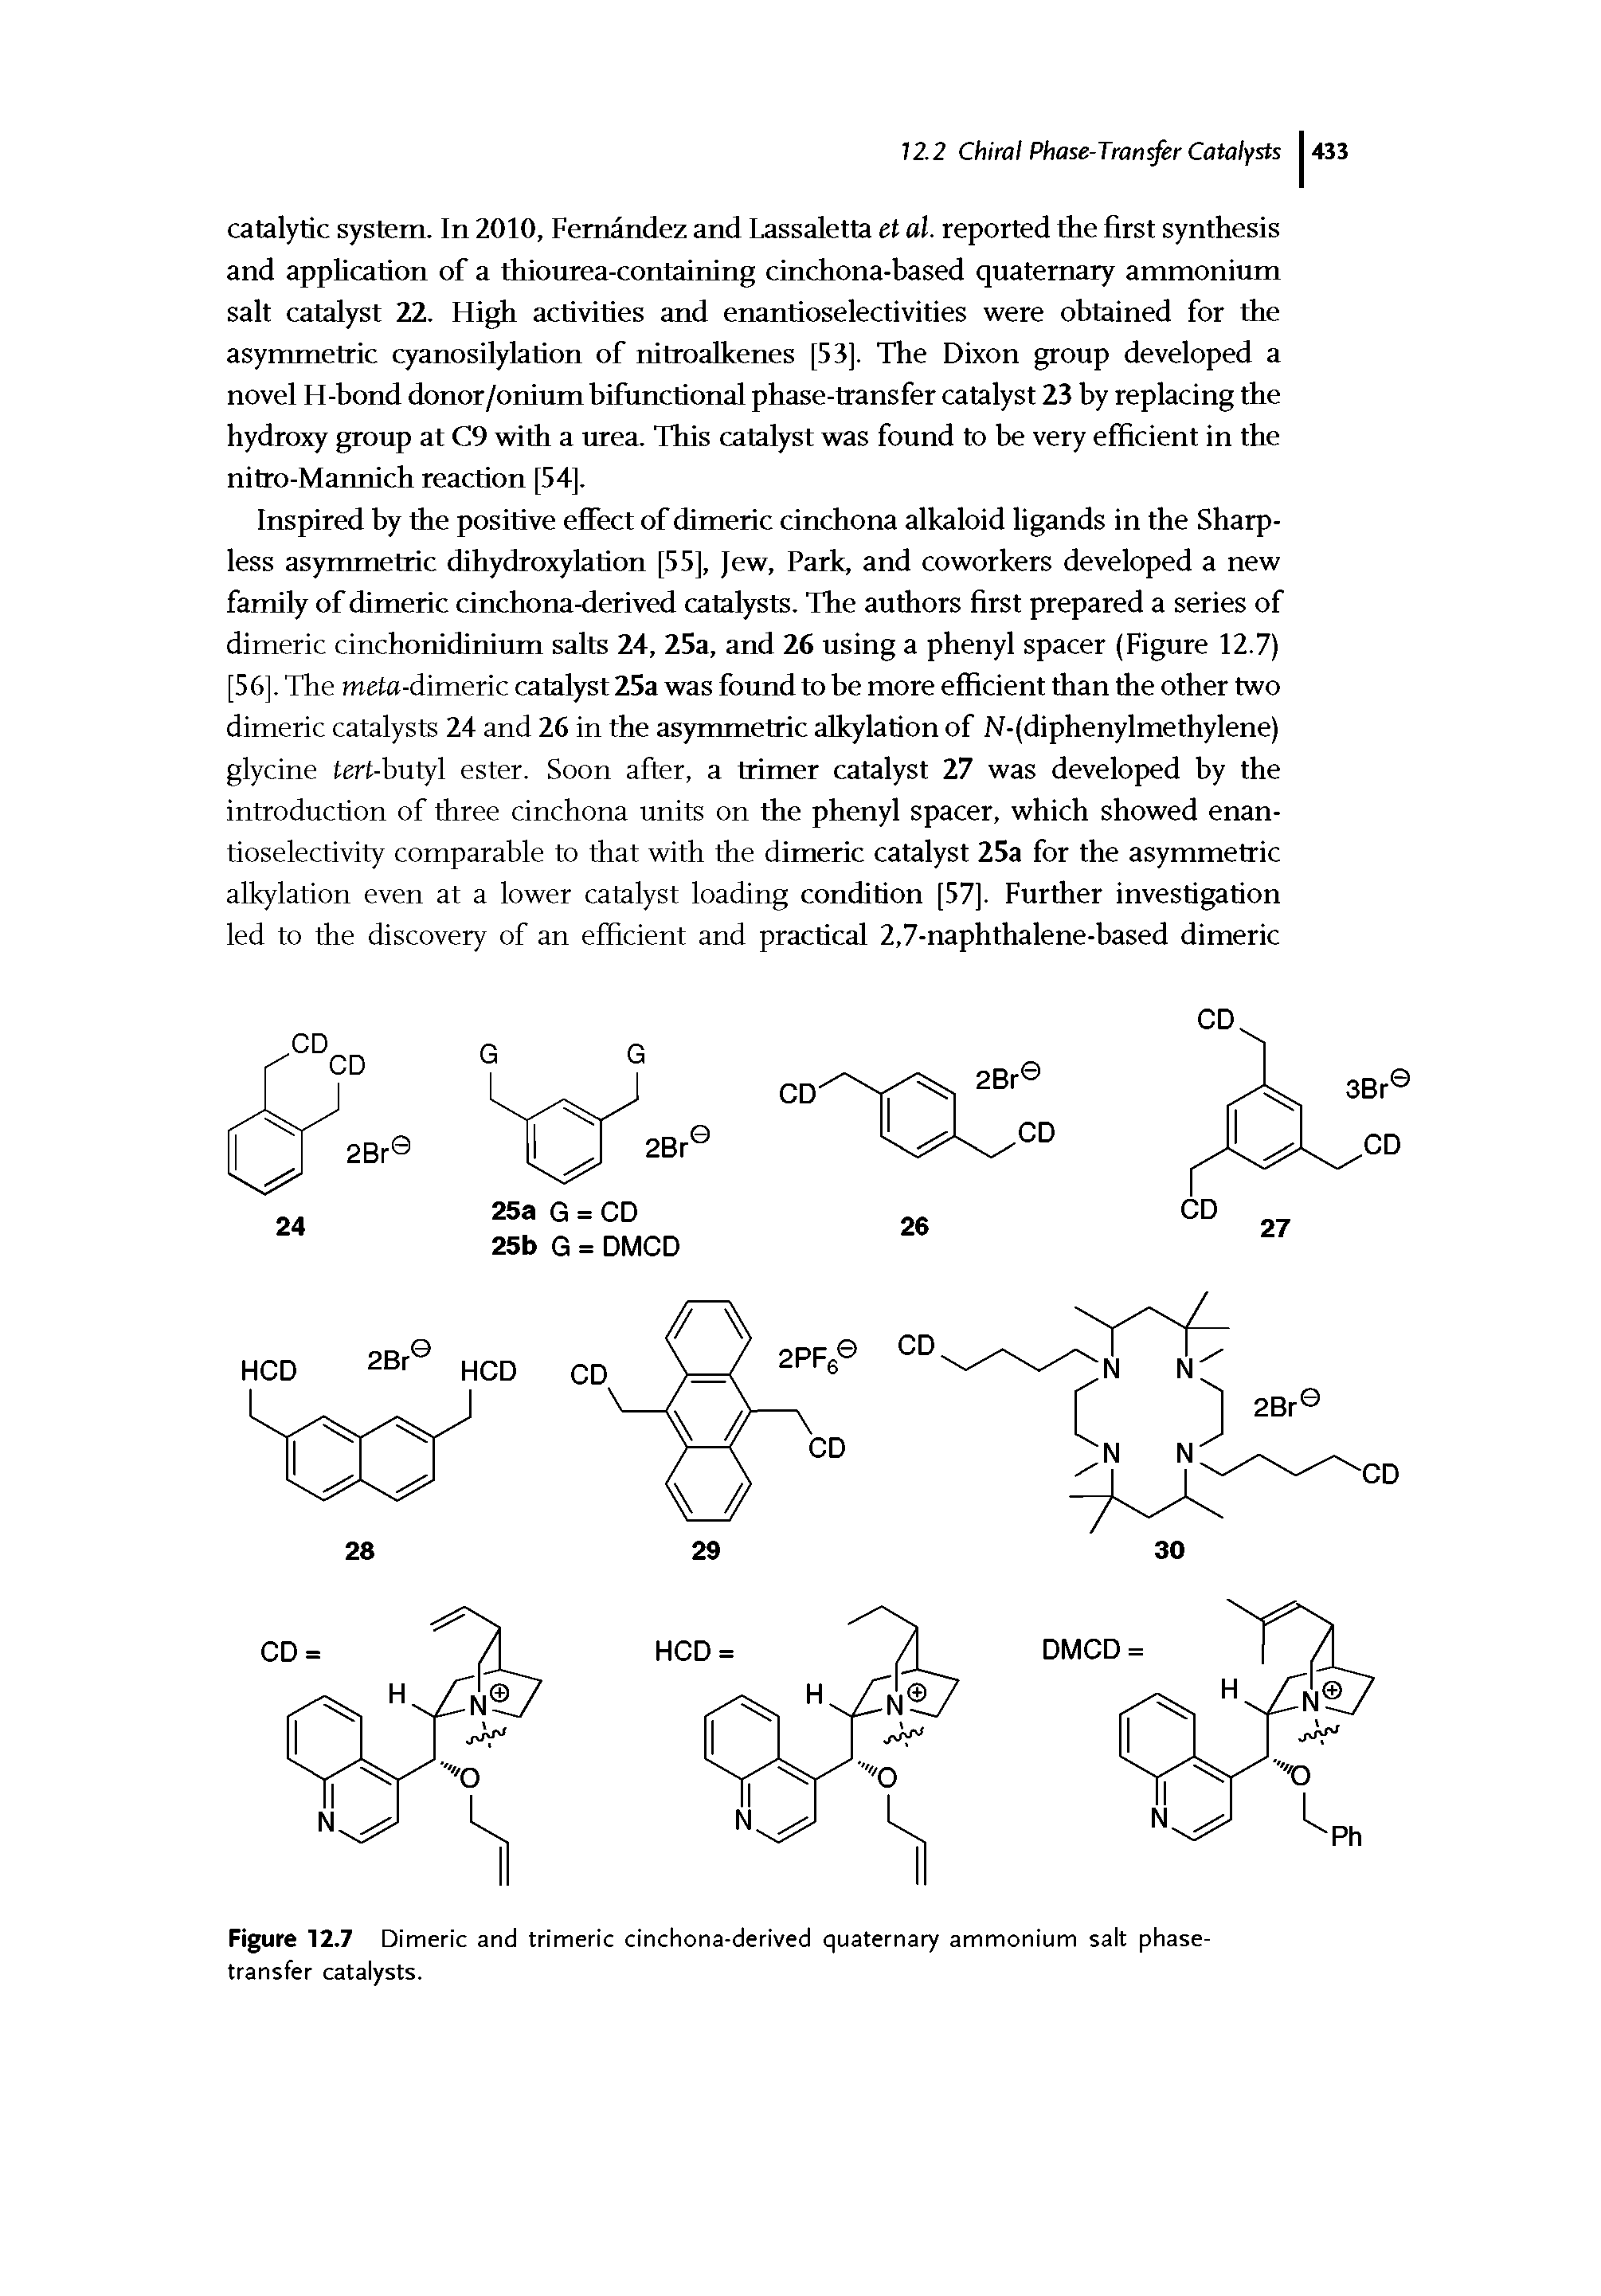 Figure 12.7 Dimeric and trimeric cinchona-derived quaternary ammonium salt phase-transfer catalysts.